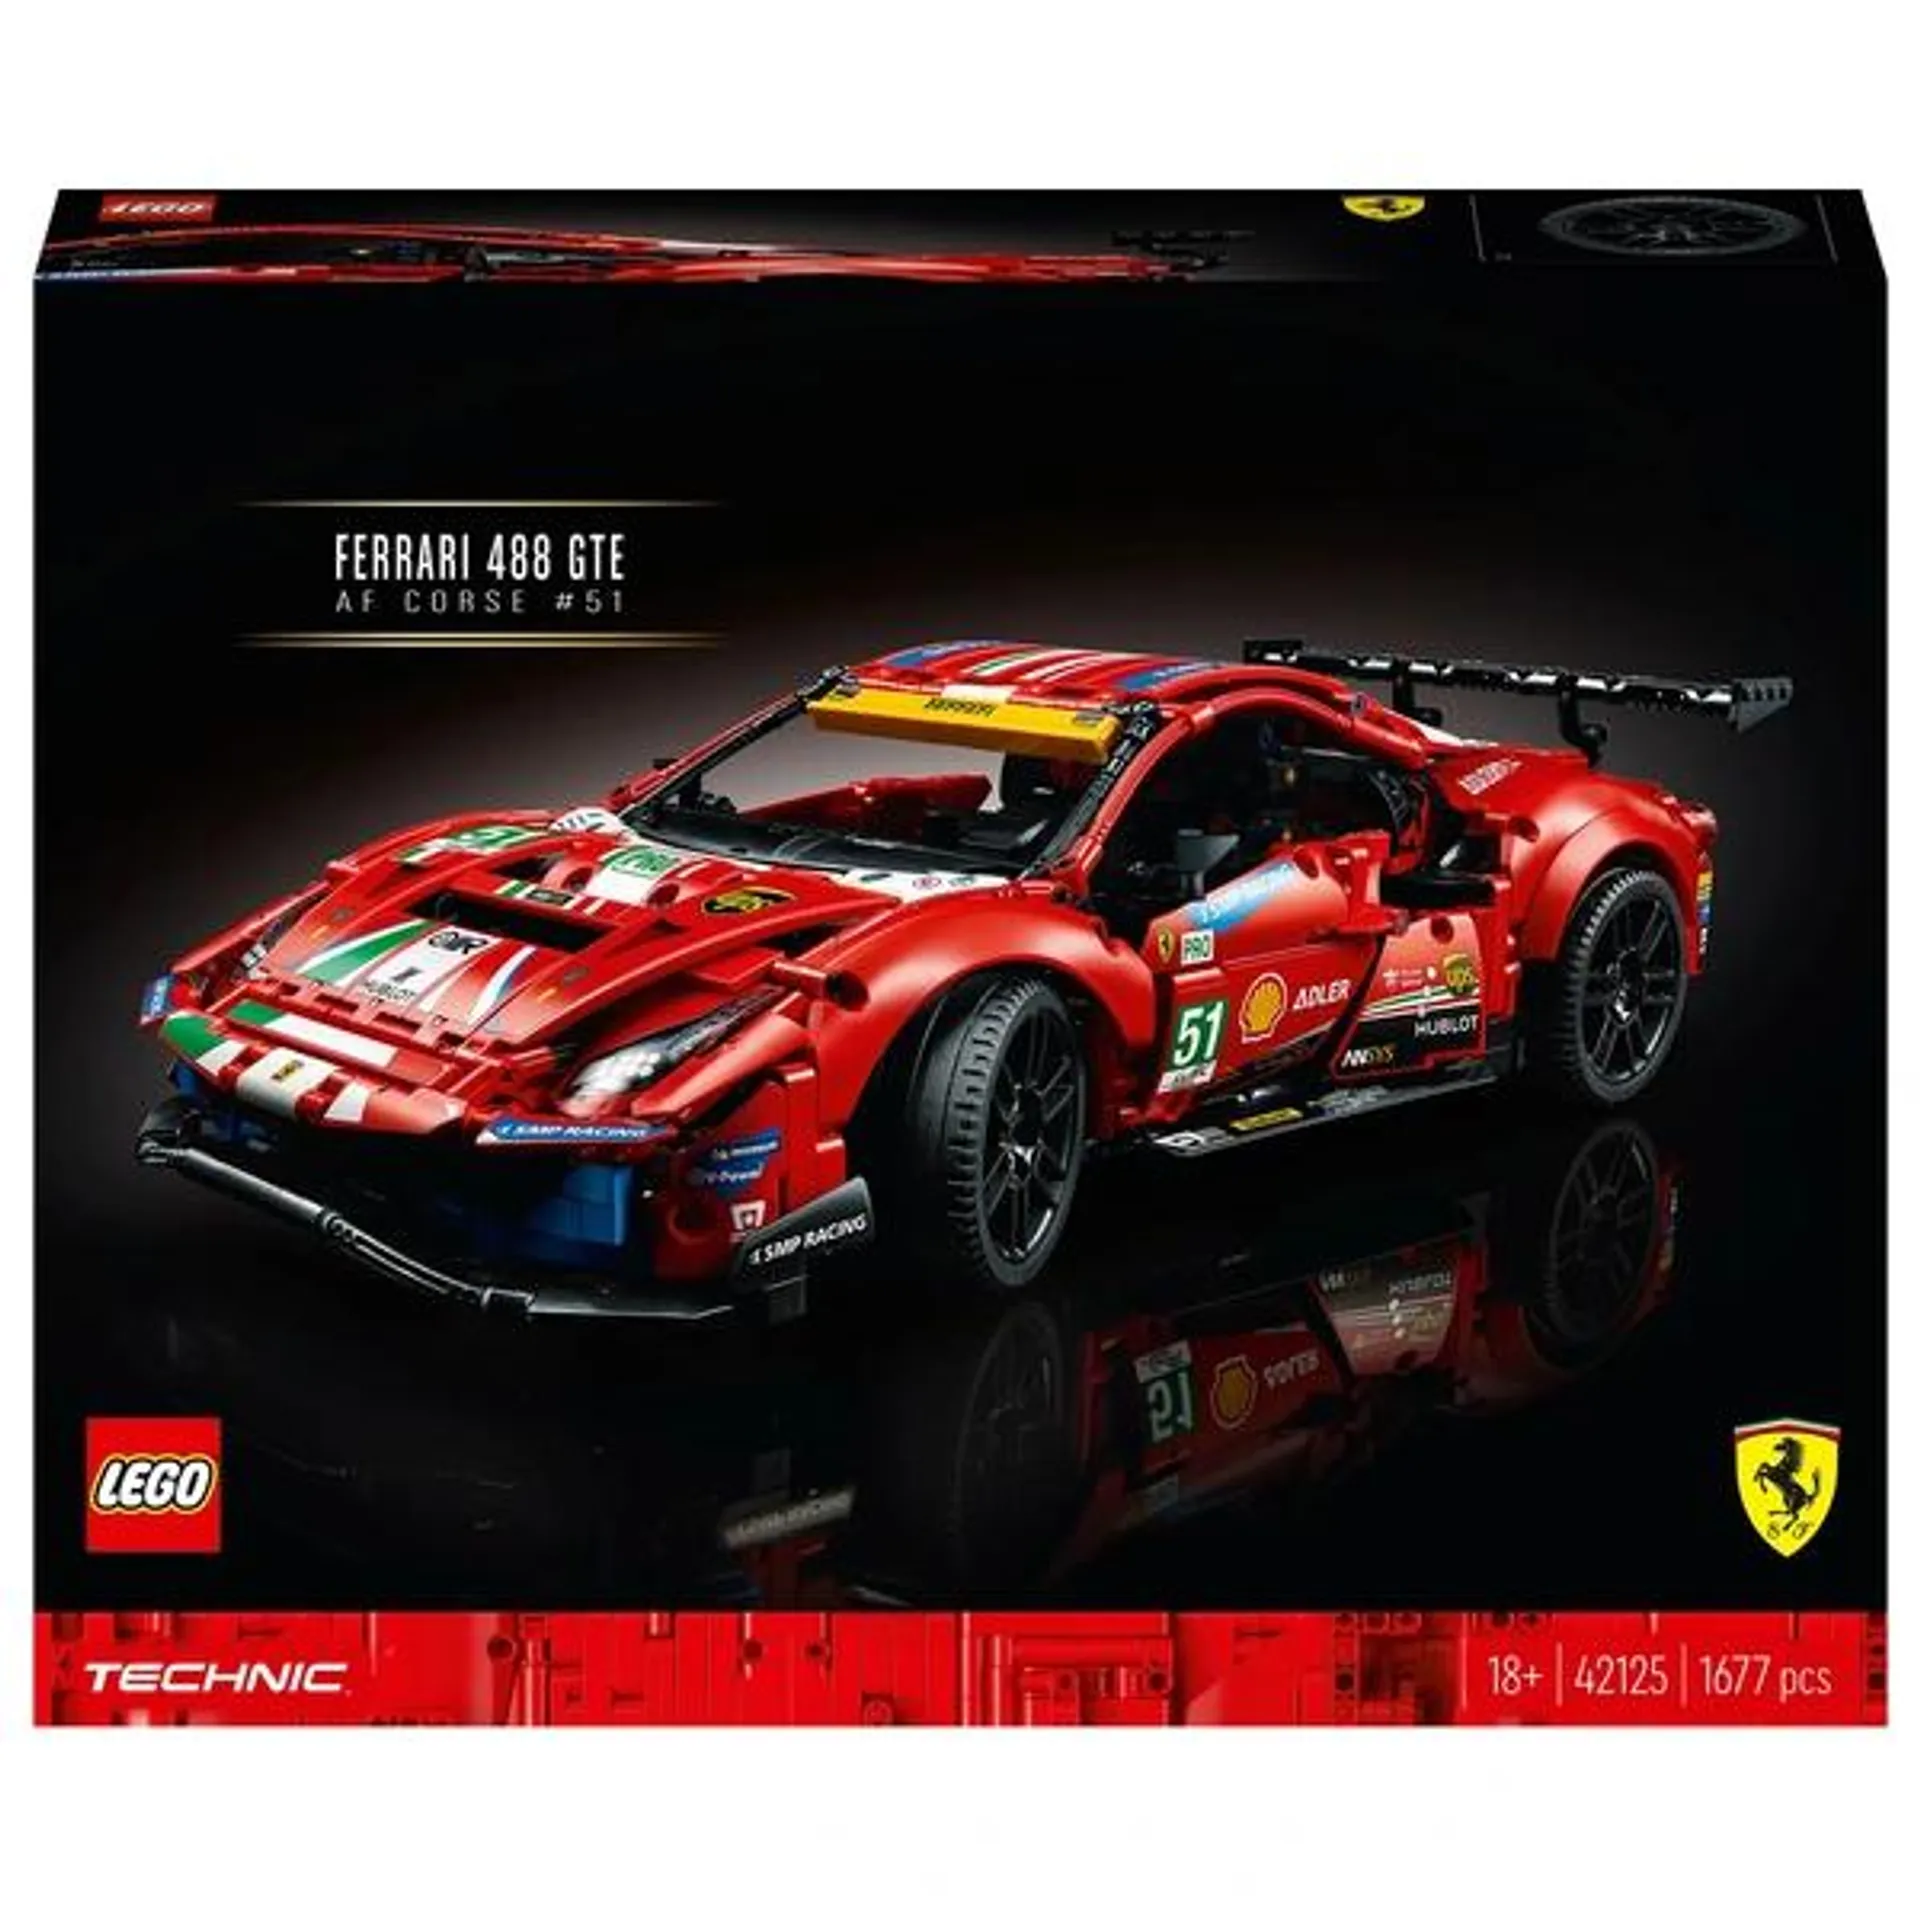 LEGO Technic 42125 Ferrari 488 GTE AF Corse 51 Racing Car Set